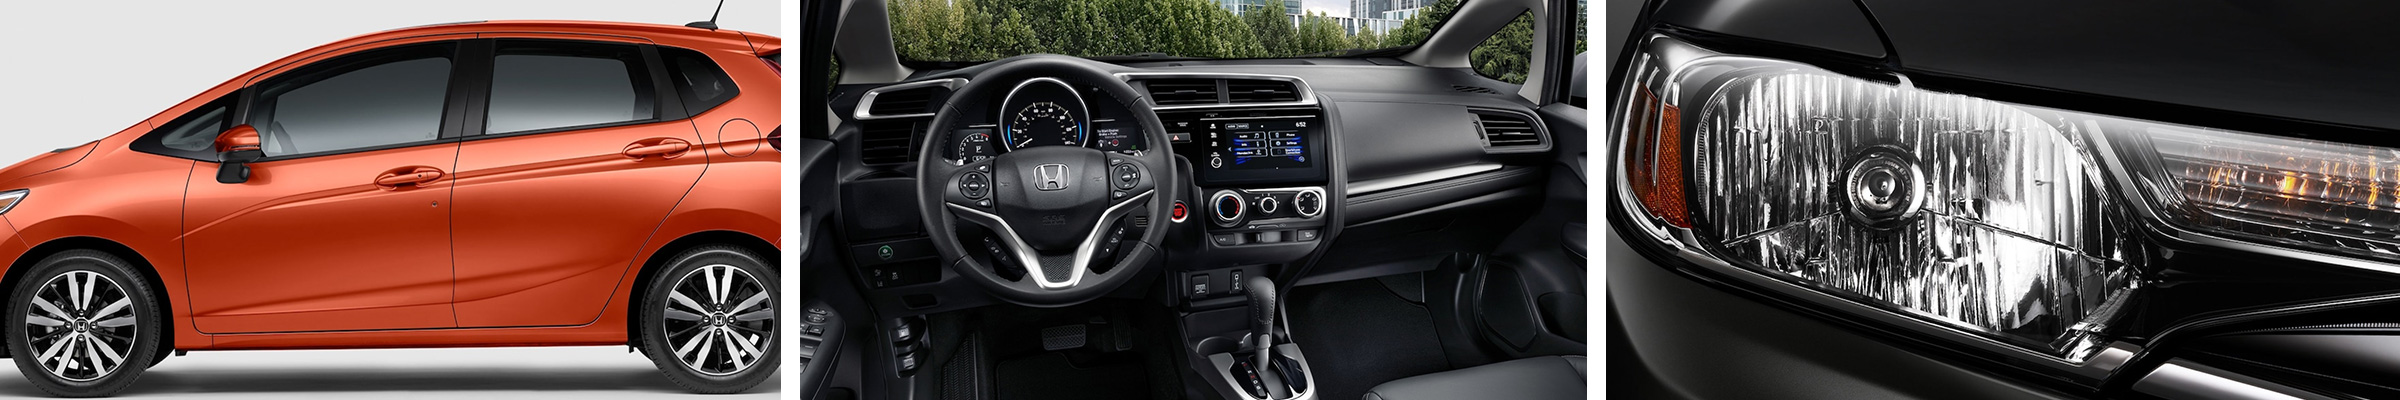 Honda Fit Interior, Honda Fit Design